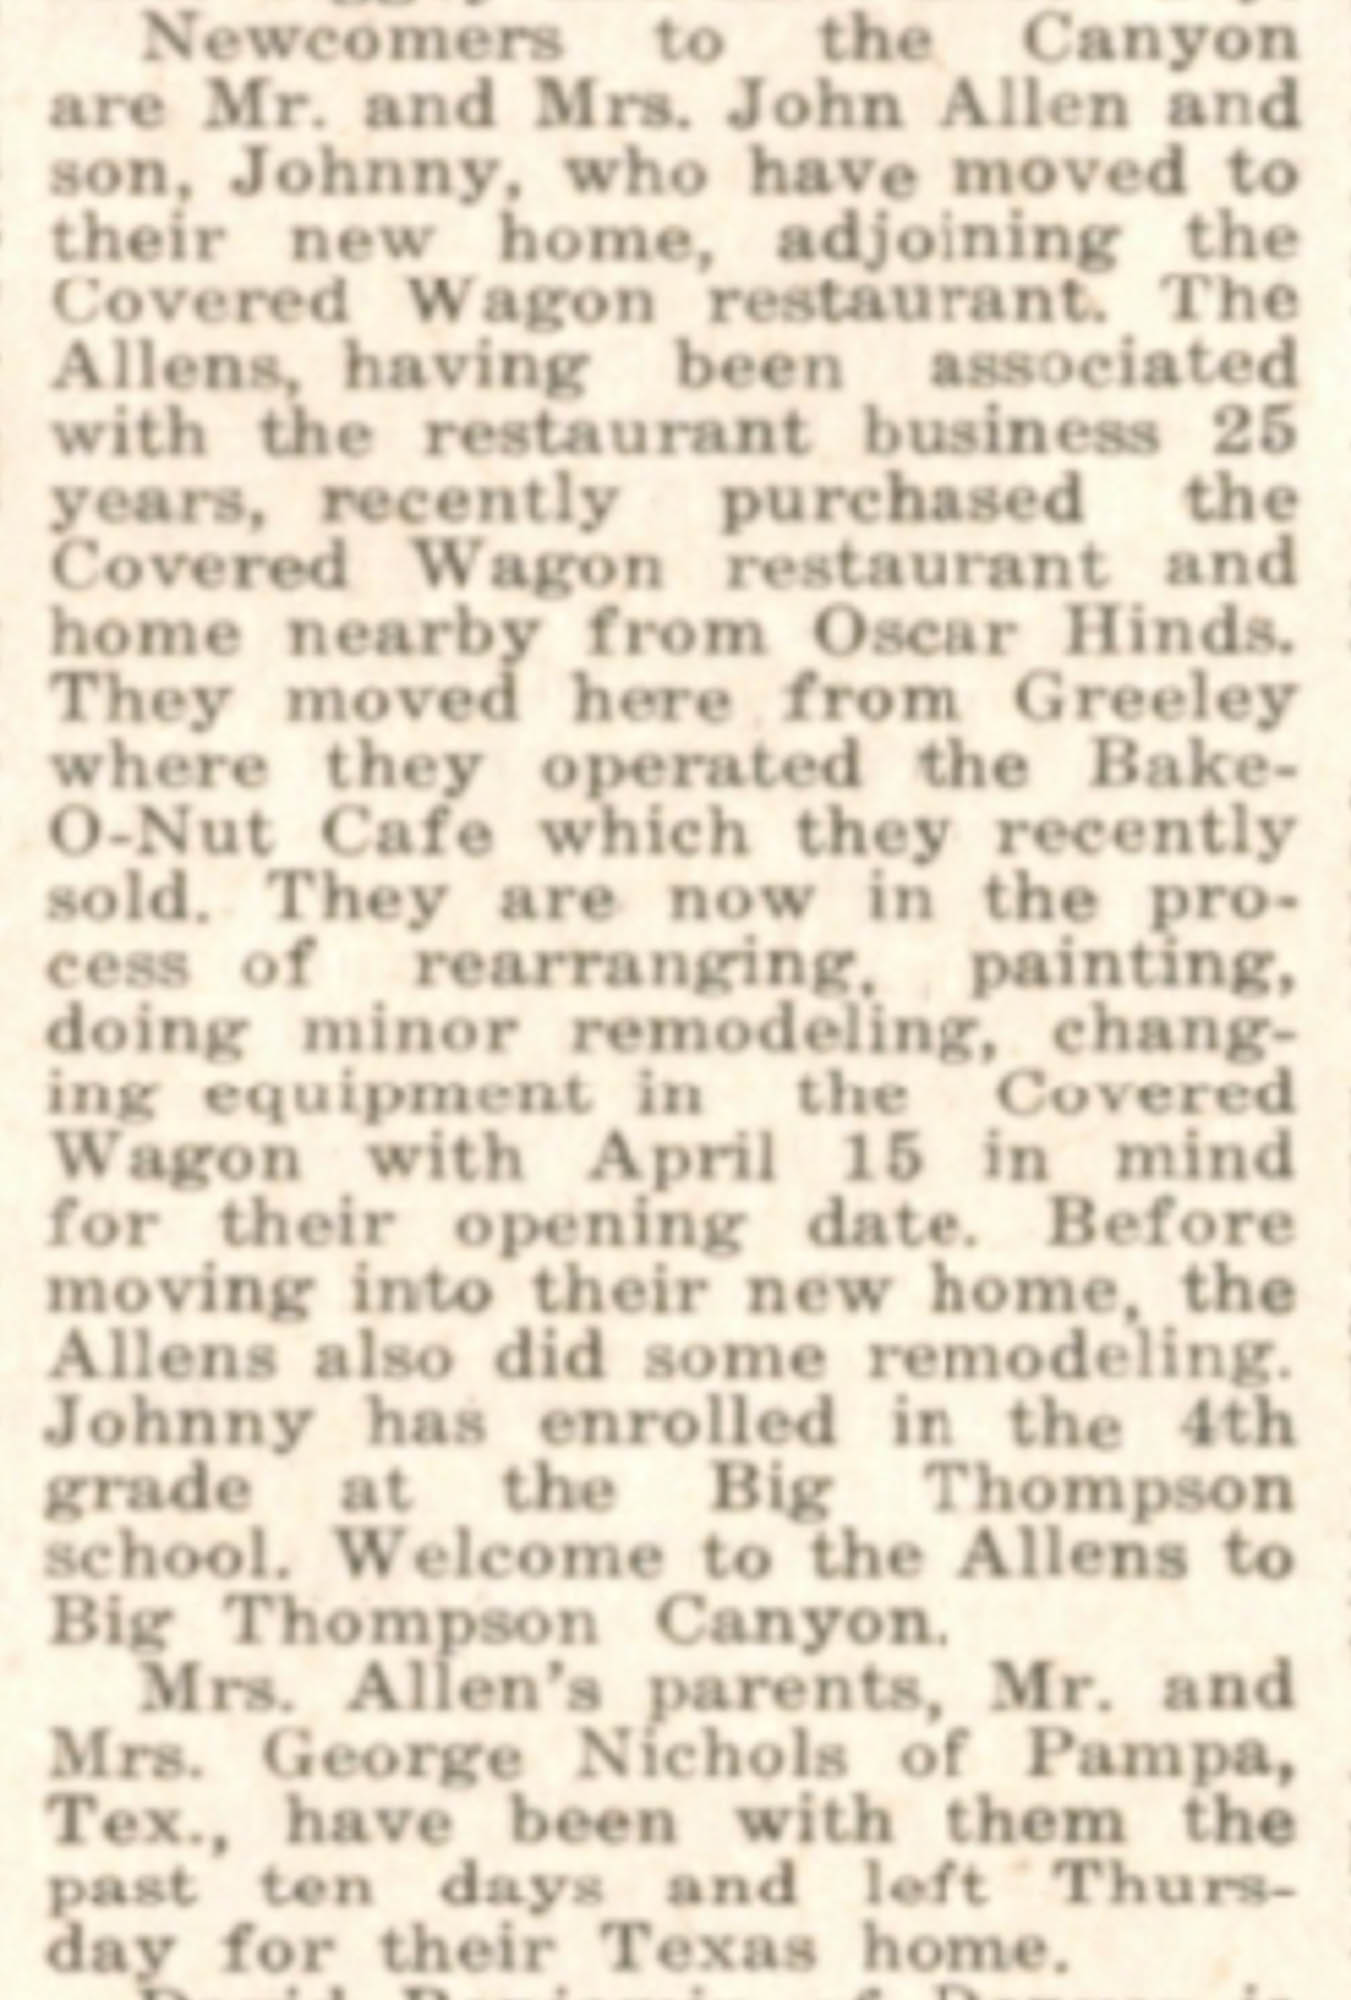 Idlewild Lodge - idlewildlodge.github.io - 1961-03-31 - The Estes Park Trail - John Allen buys Covered Wagon Restaurant